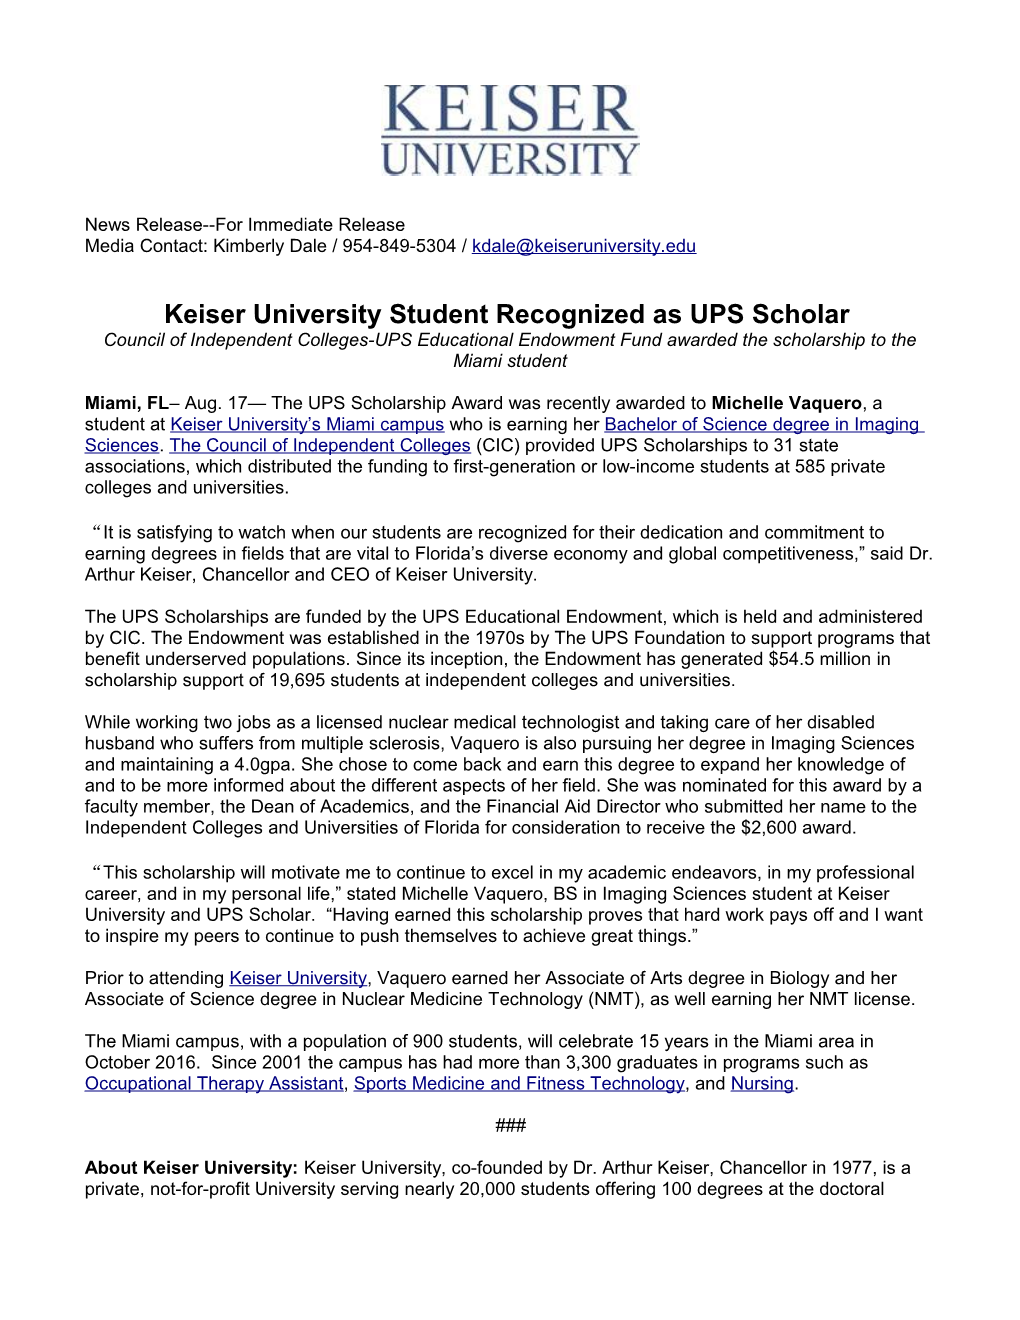 Keiser University Student Recognized As UPS Scholar